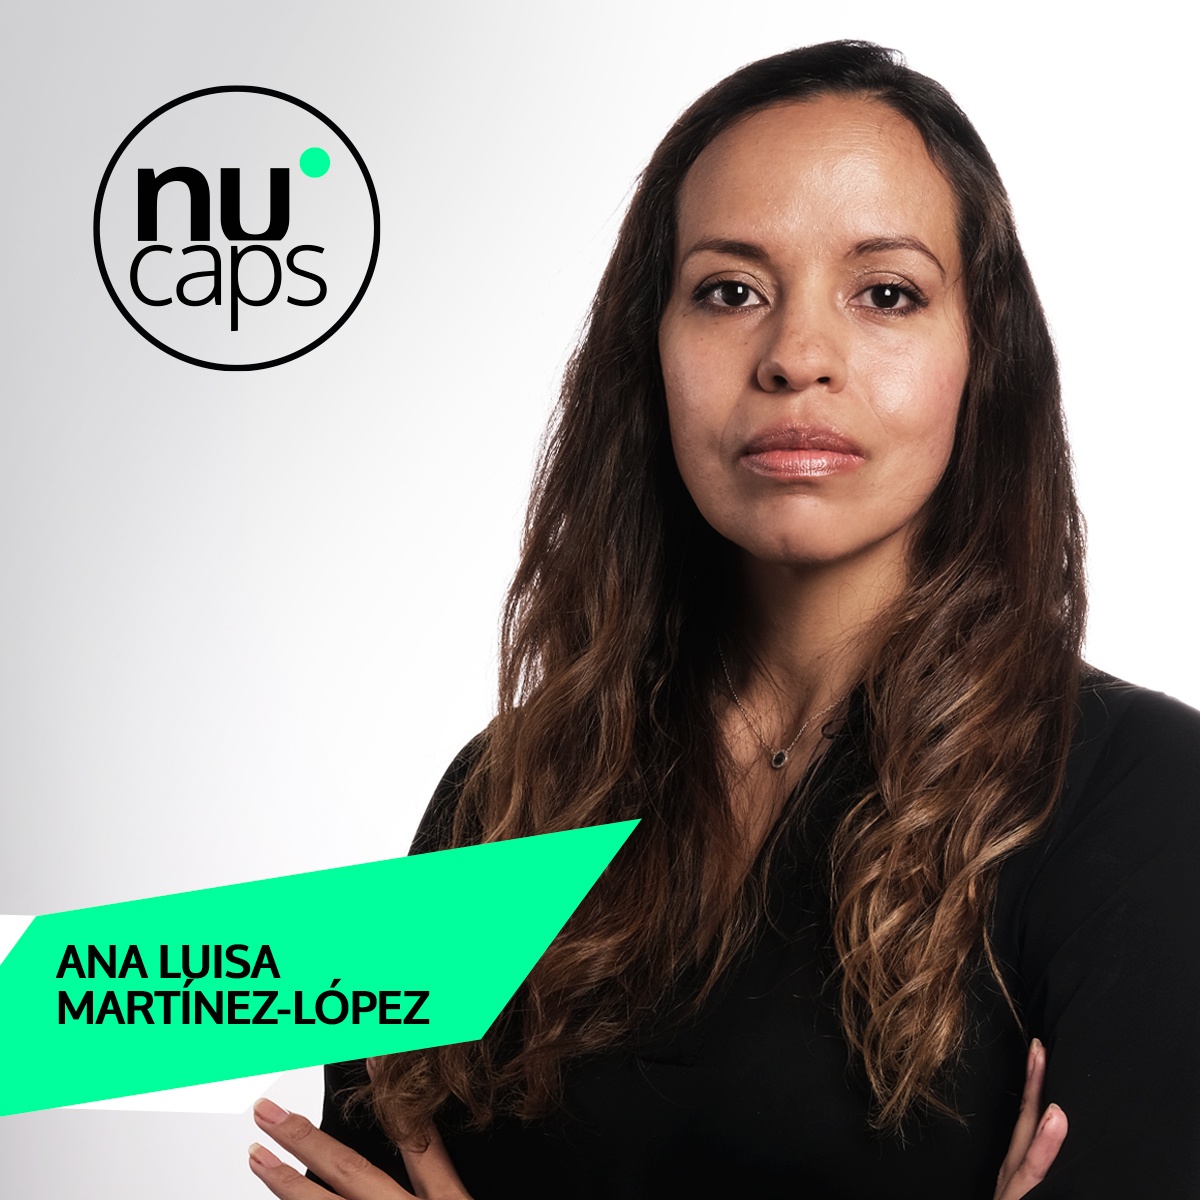 Image of Dr. Ana Luisa Martínez-López joins the Nucaps team